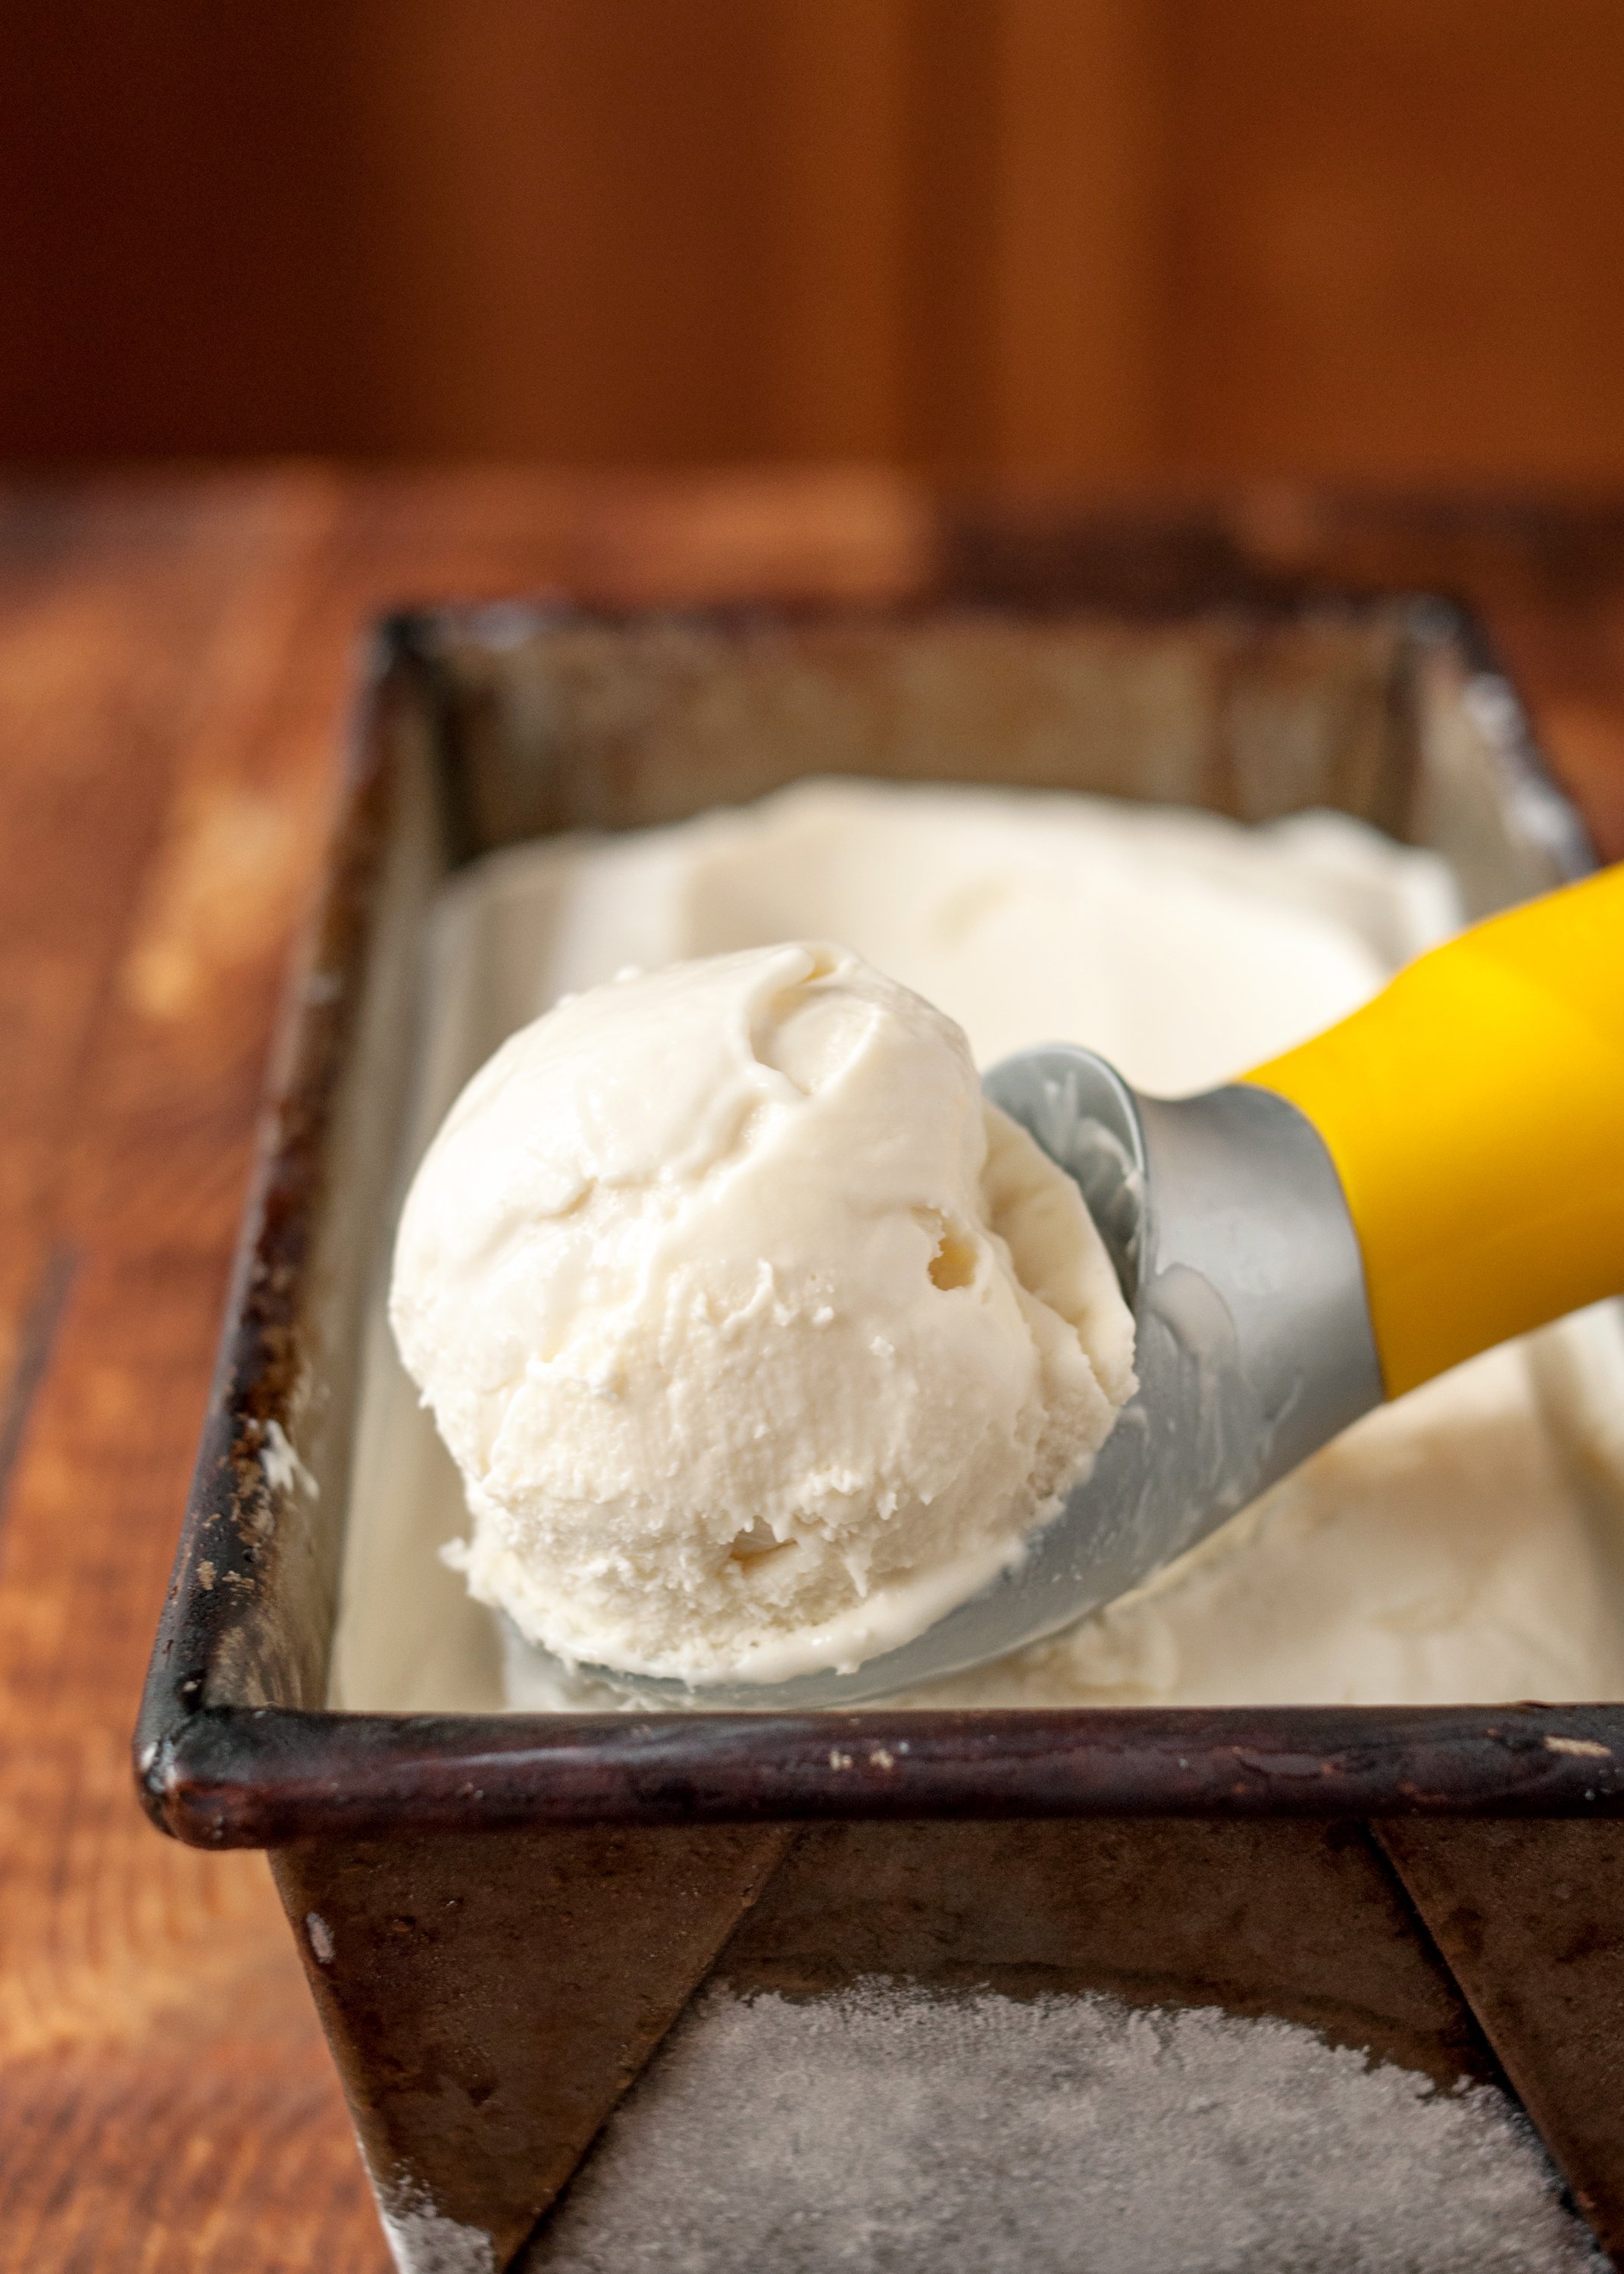 4 ingredients make this no-churn easy ice cream recipe rich & creamy